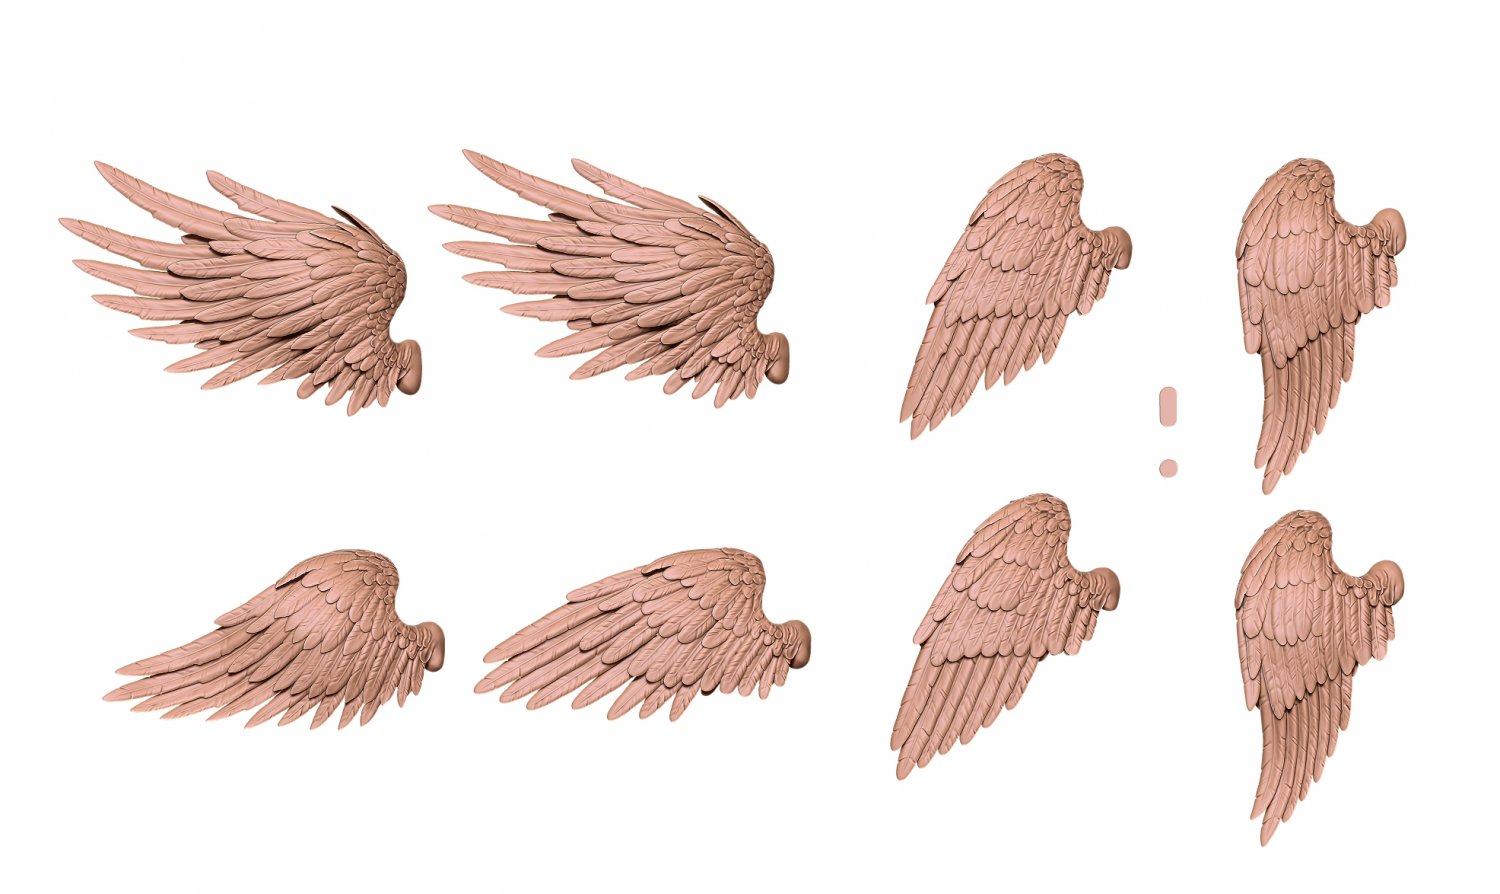 eagle wing anatomy